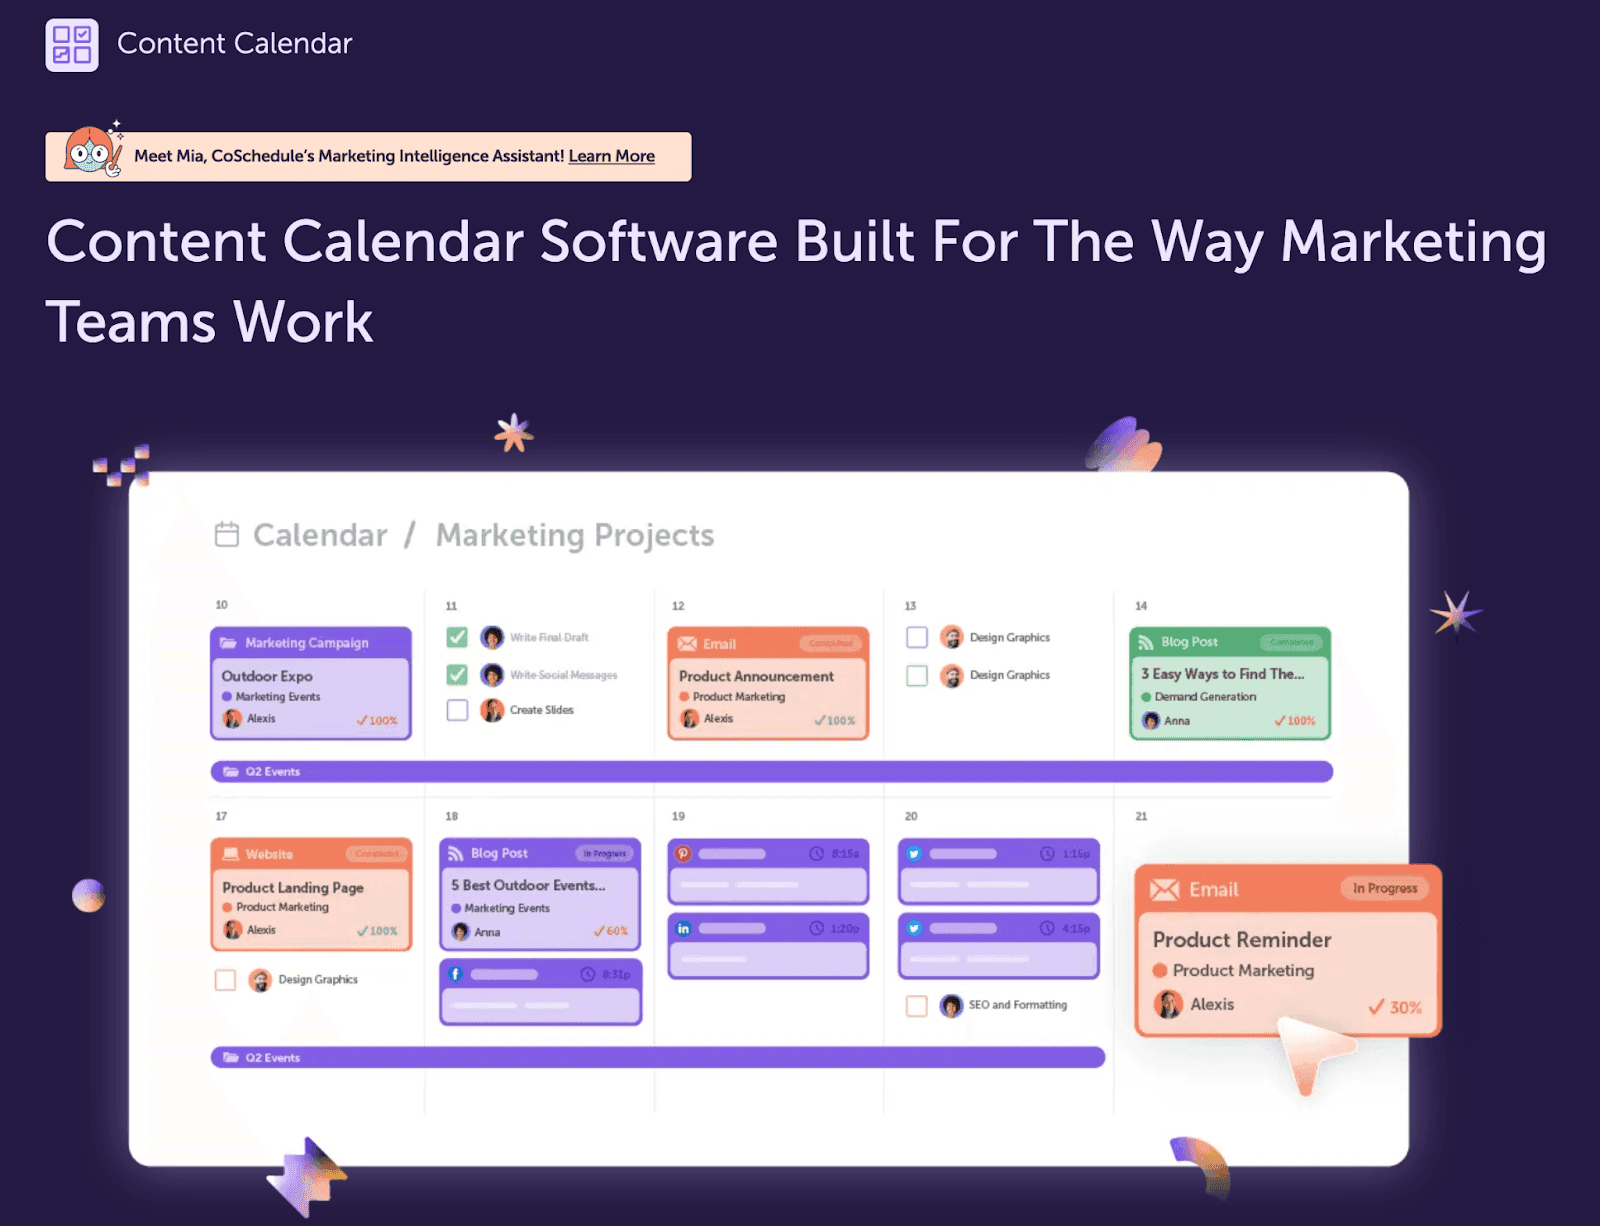 CoSchedule Content Calendar - Content calendar software built for the way marketing teams should work